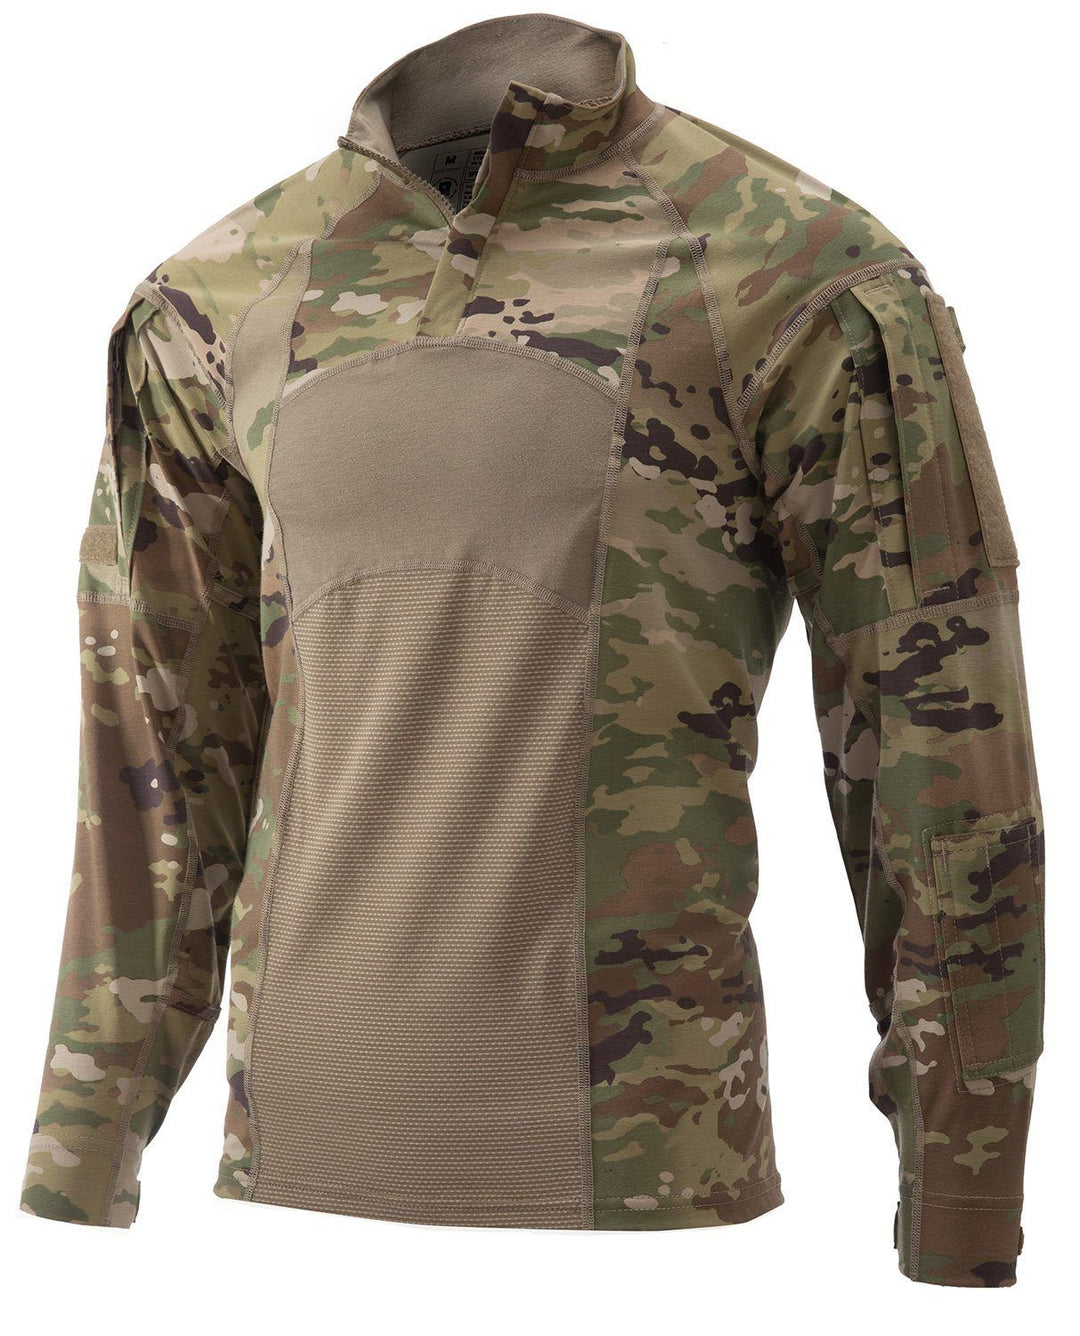 Apparel - Tops - Combat - USGI Massif ACS Type II FR Army Combat Shirt - OCP